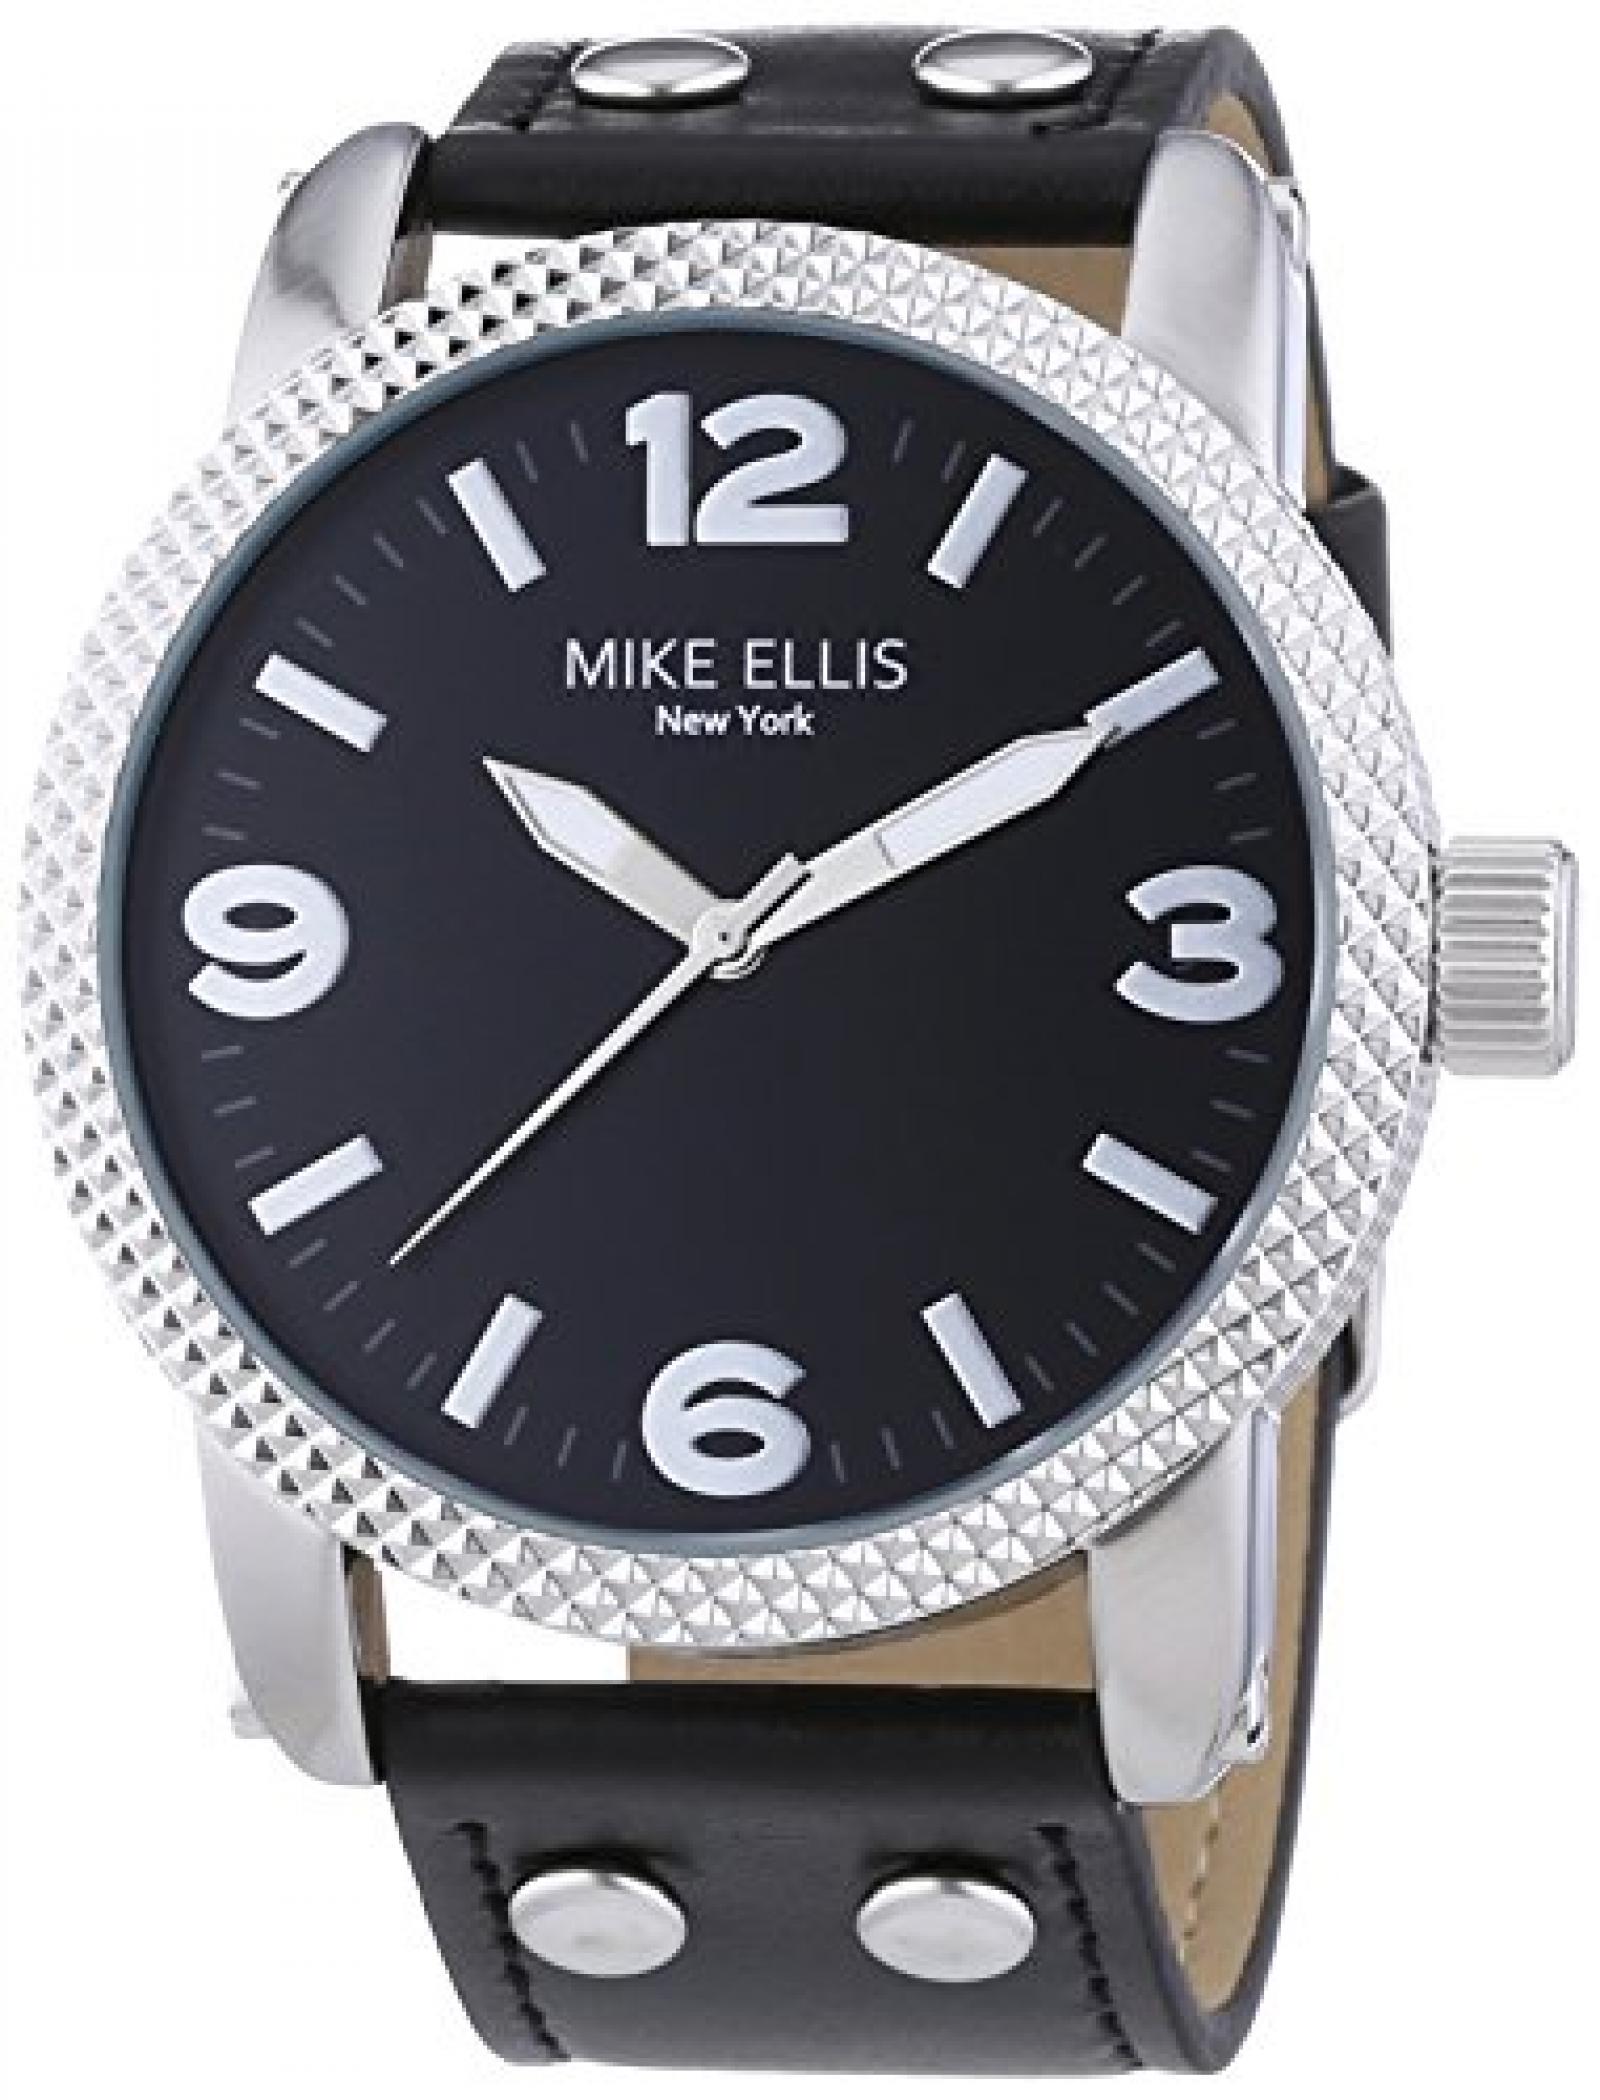 Mike Ellis New York Herren-Armbanduhr XL an:e Analog Quarz SL4316 